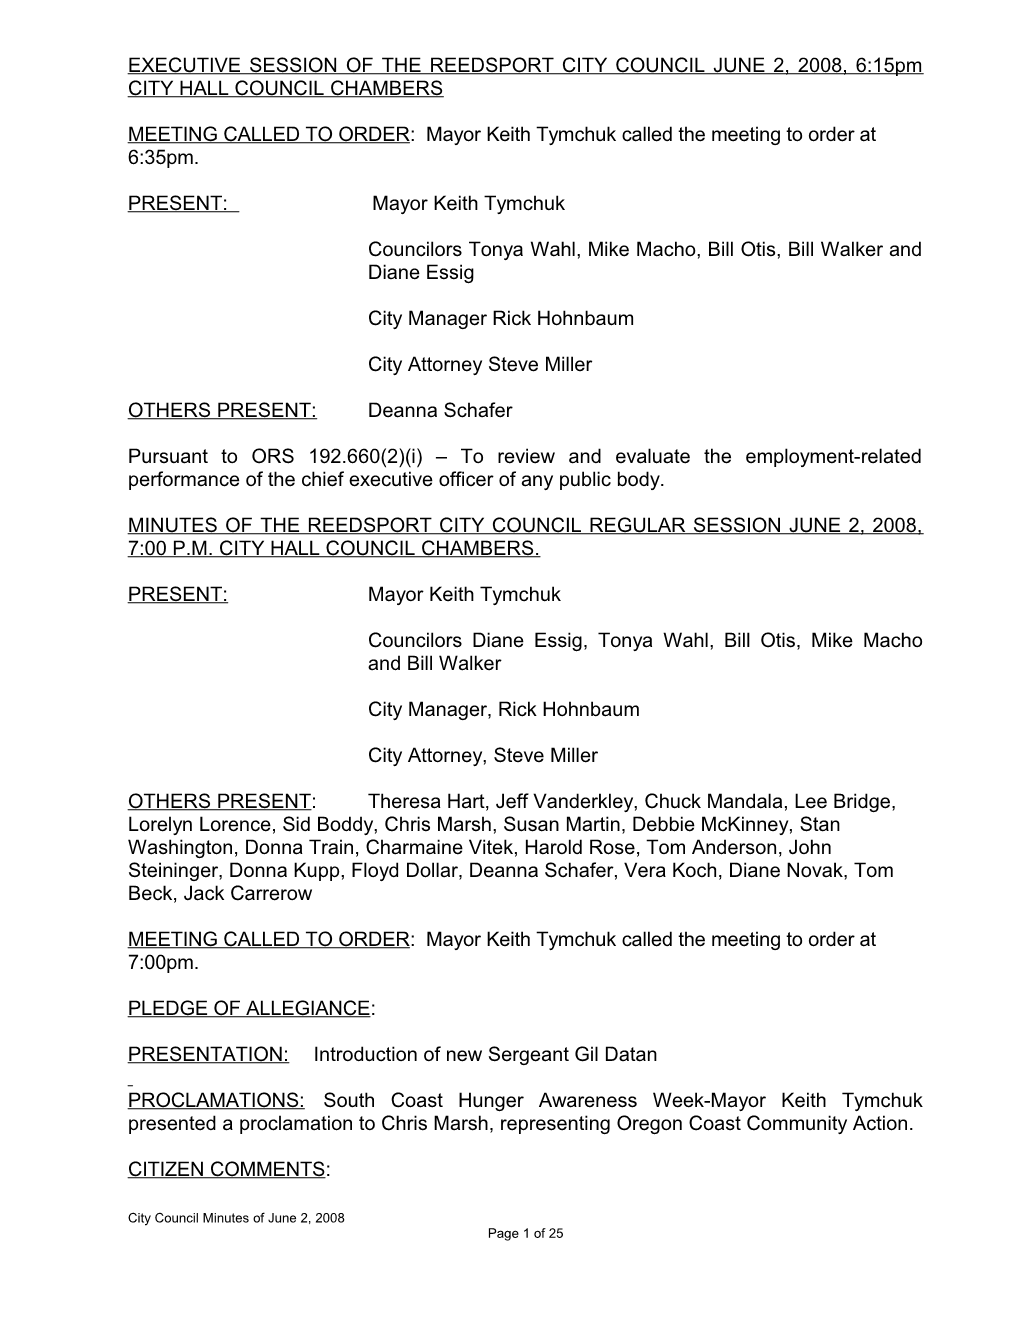 Minutes of the Reedsport City Council Regular Session April 5, 2004, 7:00 P s2